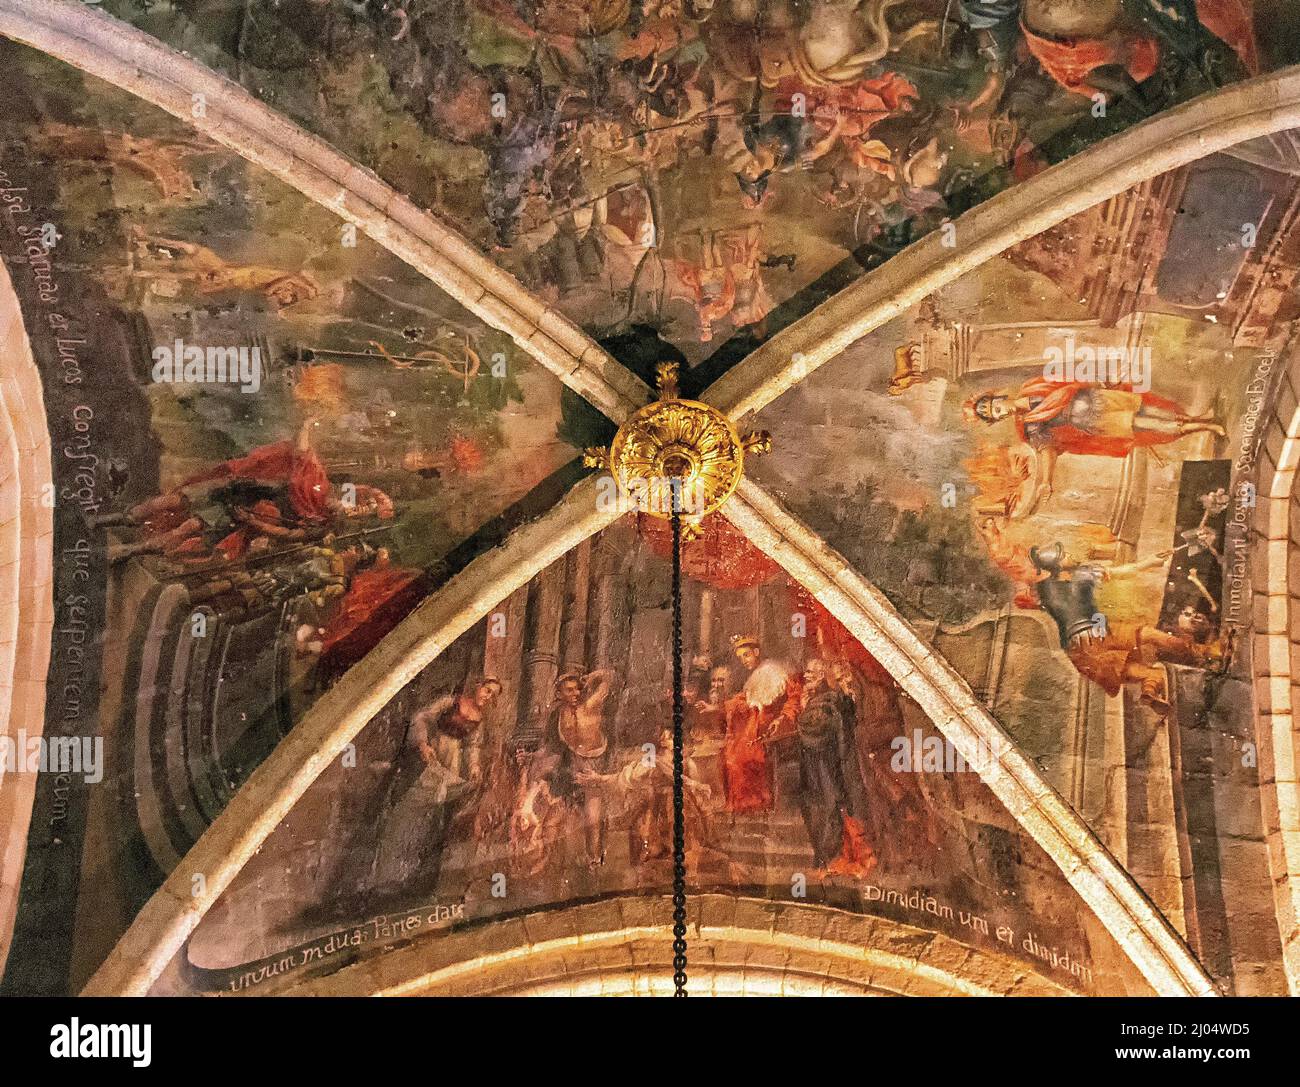 Bóveda del transepto de la Catedral de Mondoñedo Stock Photo